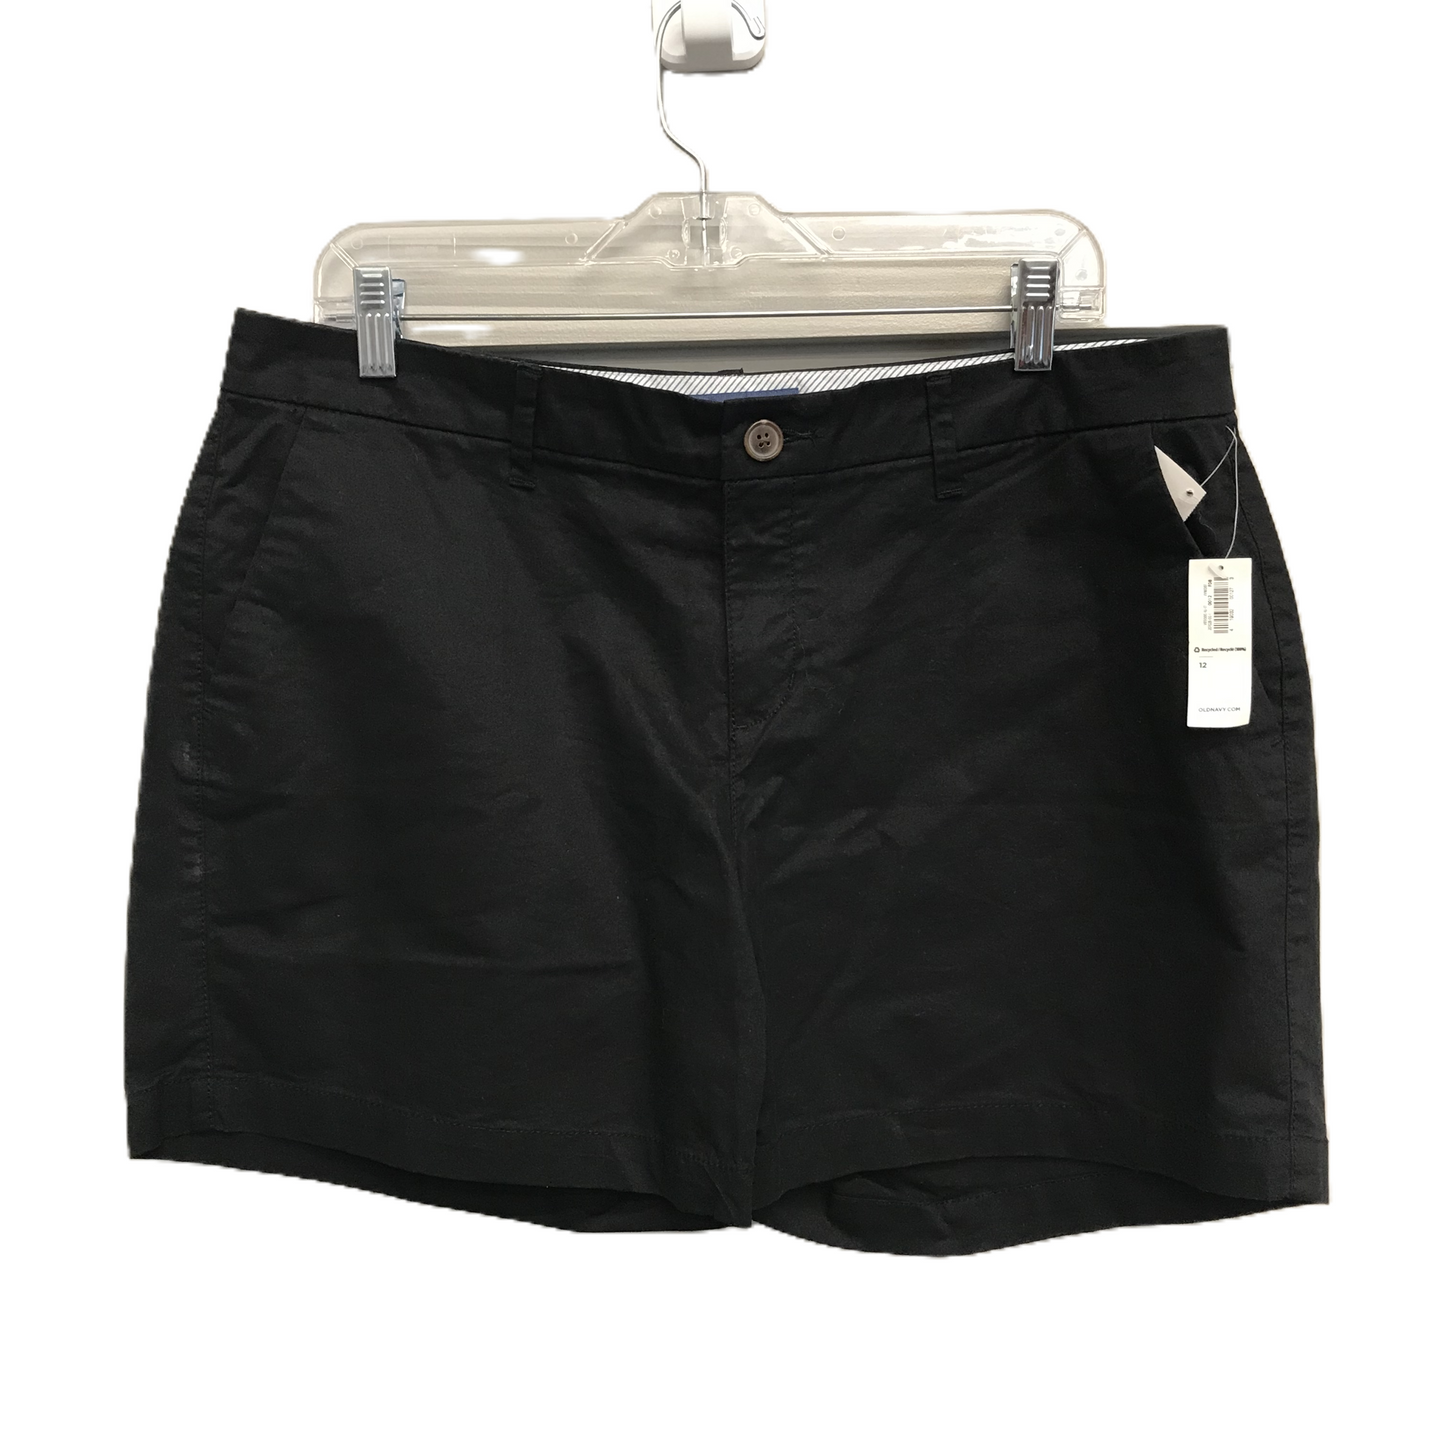 Black Shorts By Old Navy, Size: 12